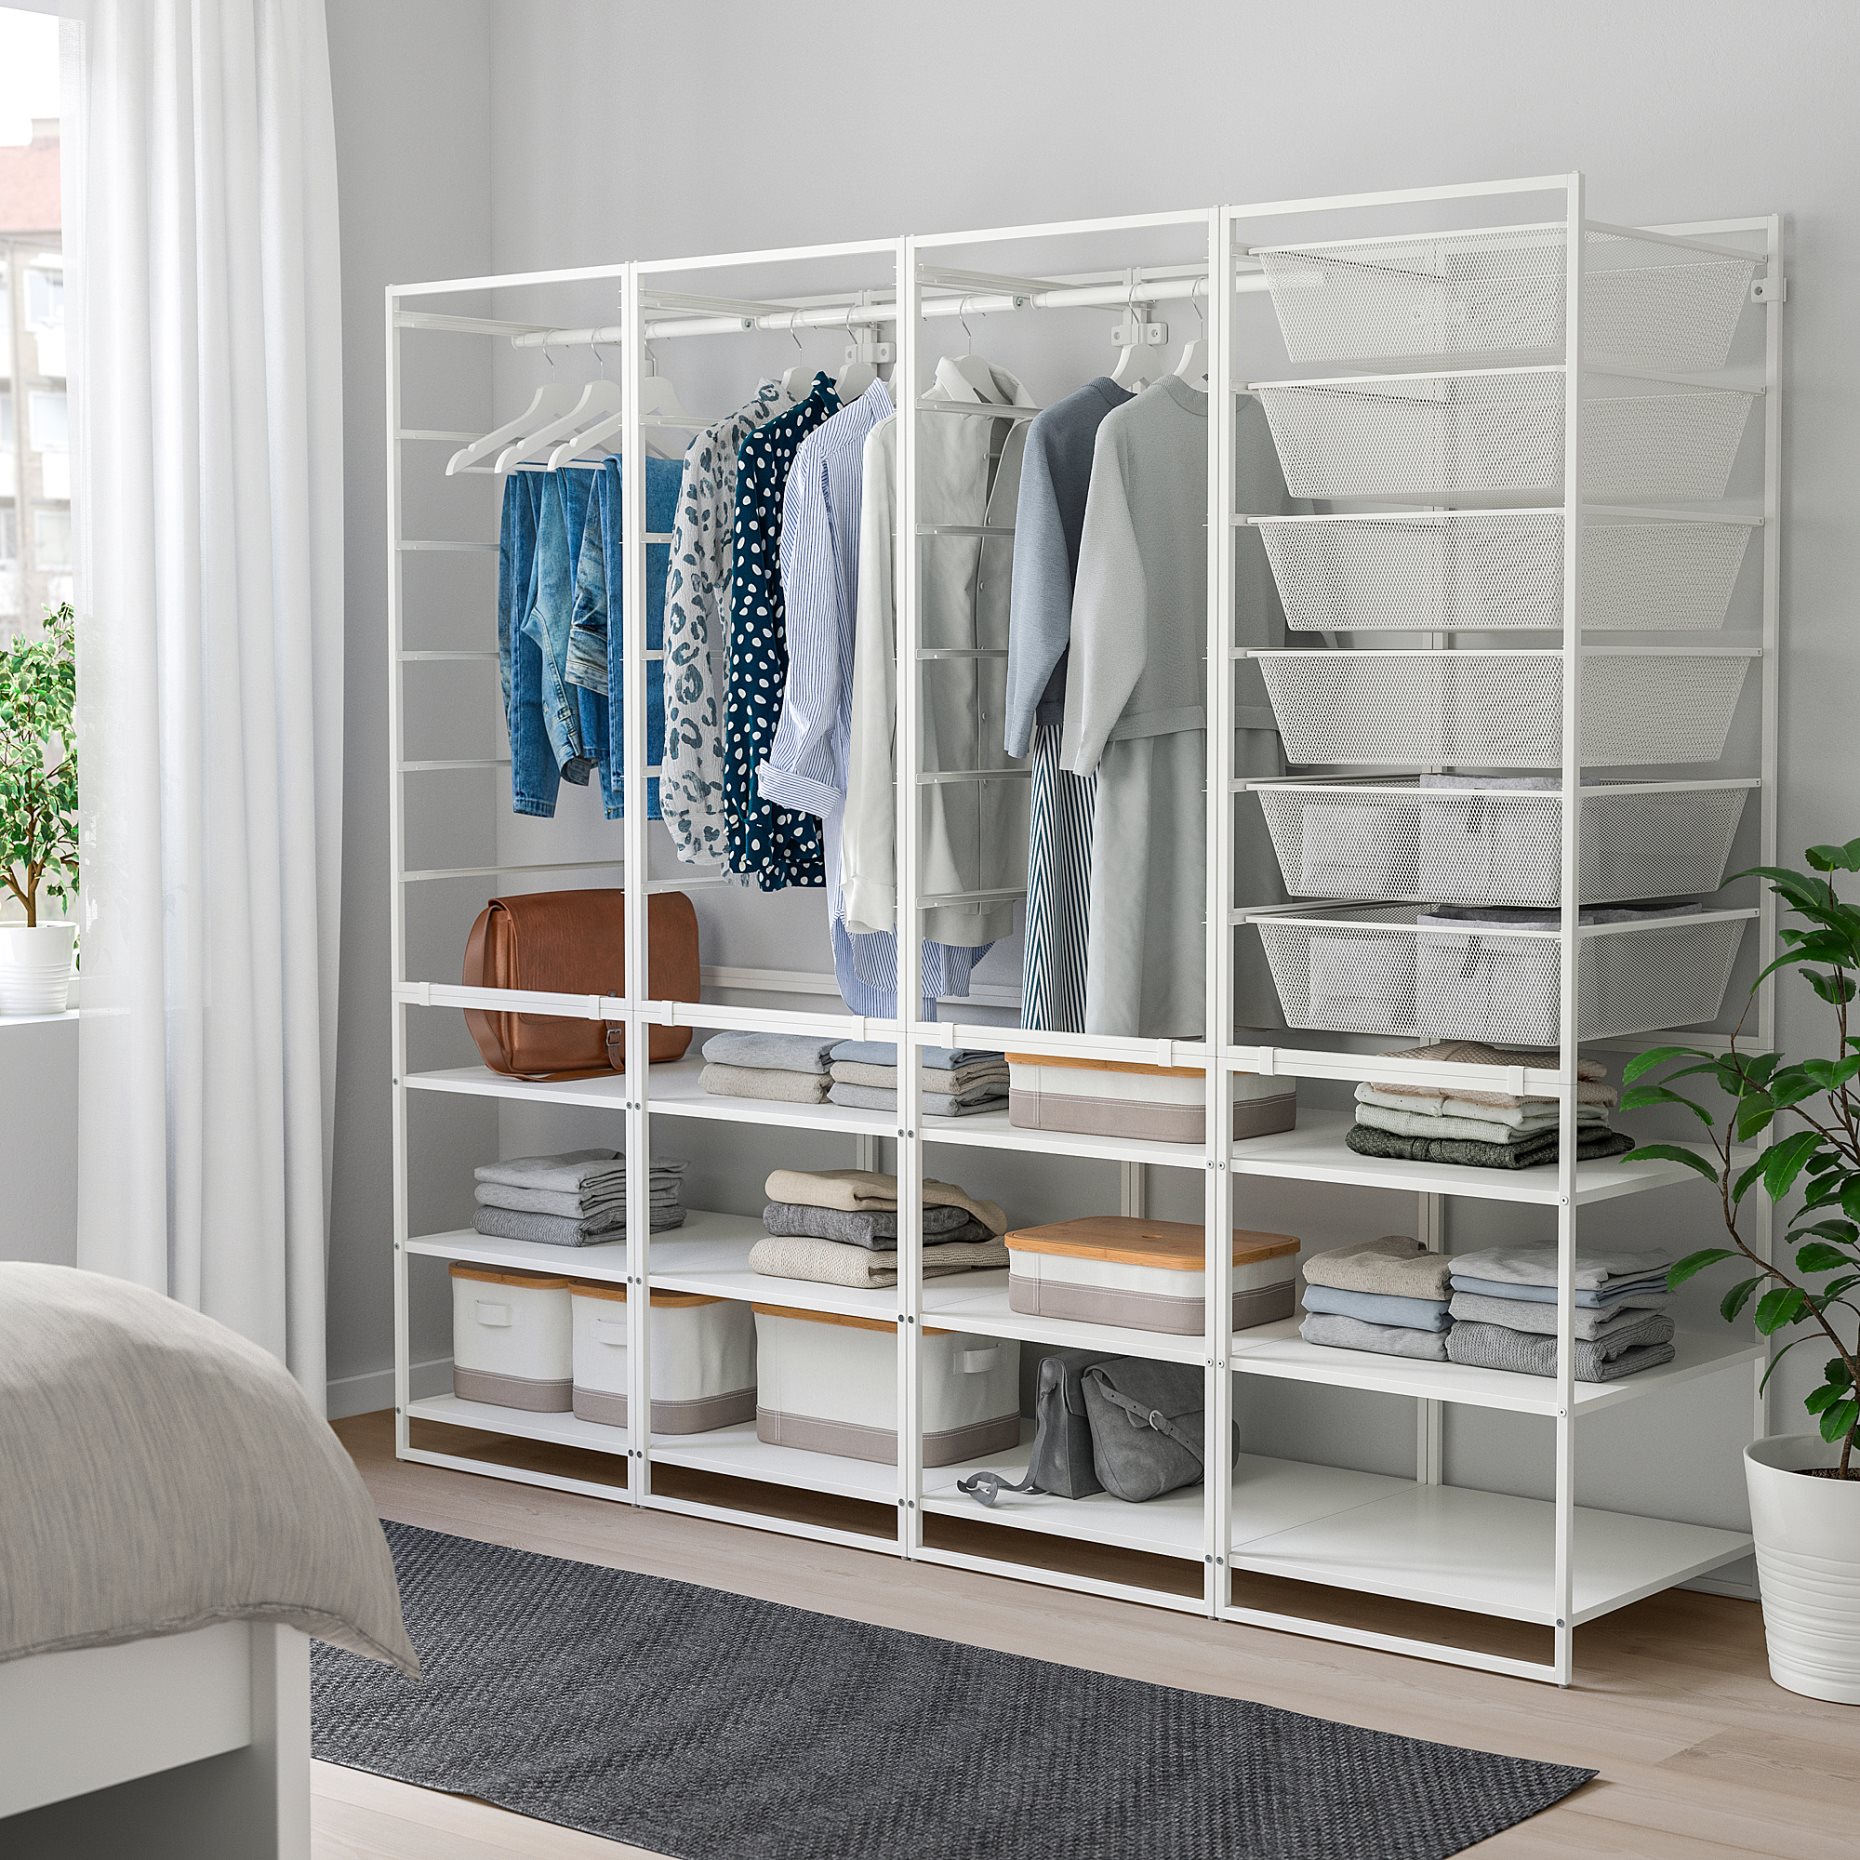 JONAXEL, frame/mesh baskets/clothes rail/shelving units, 592.976.74